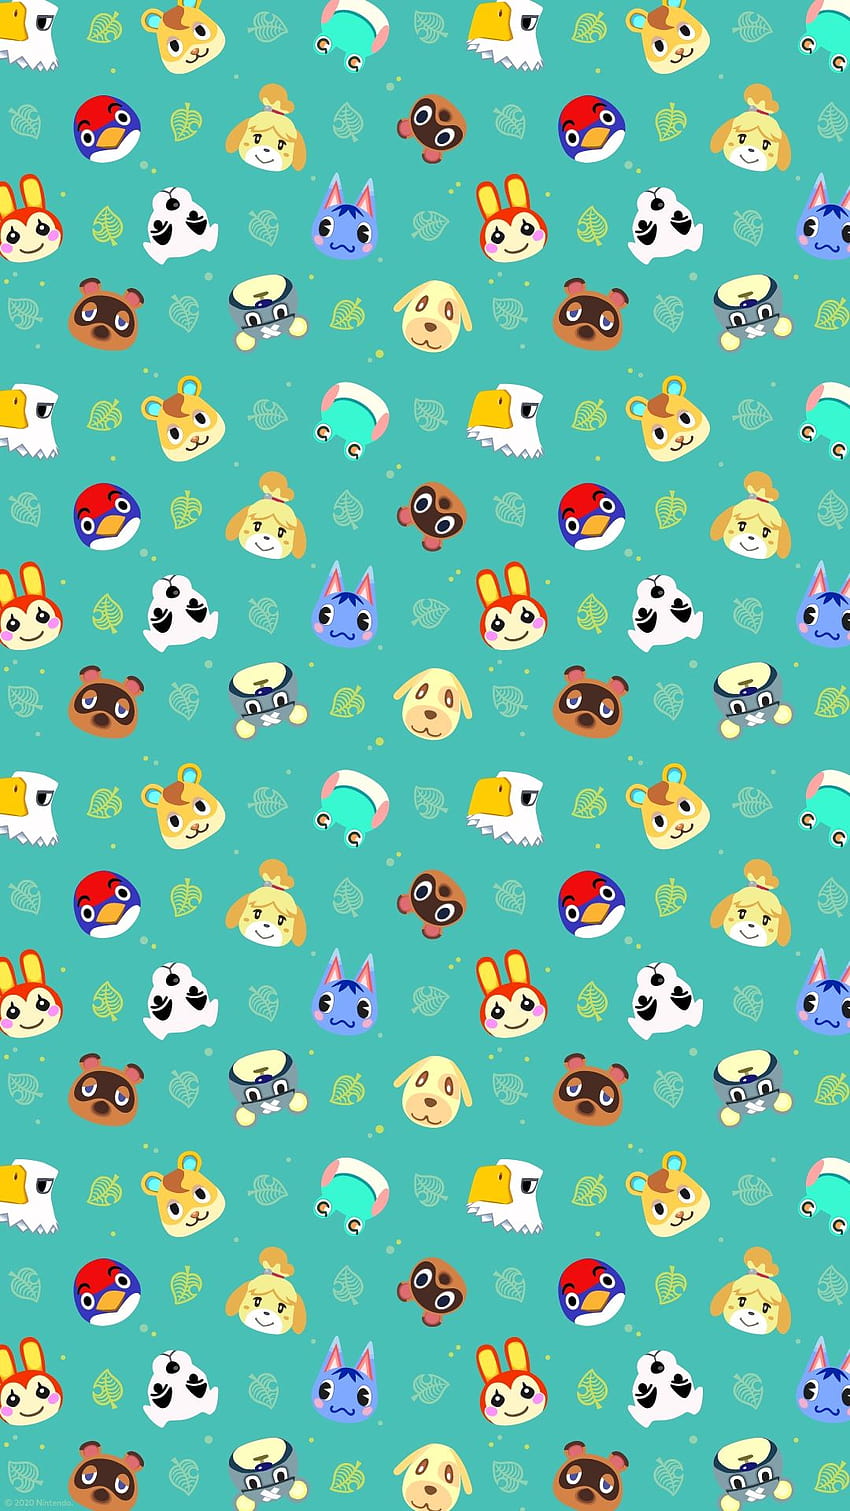 Paket iPhone Animal Crossing wallpaper ponsel HD